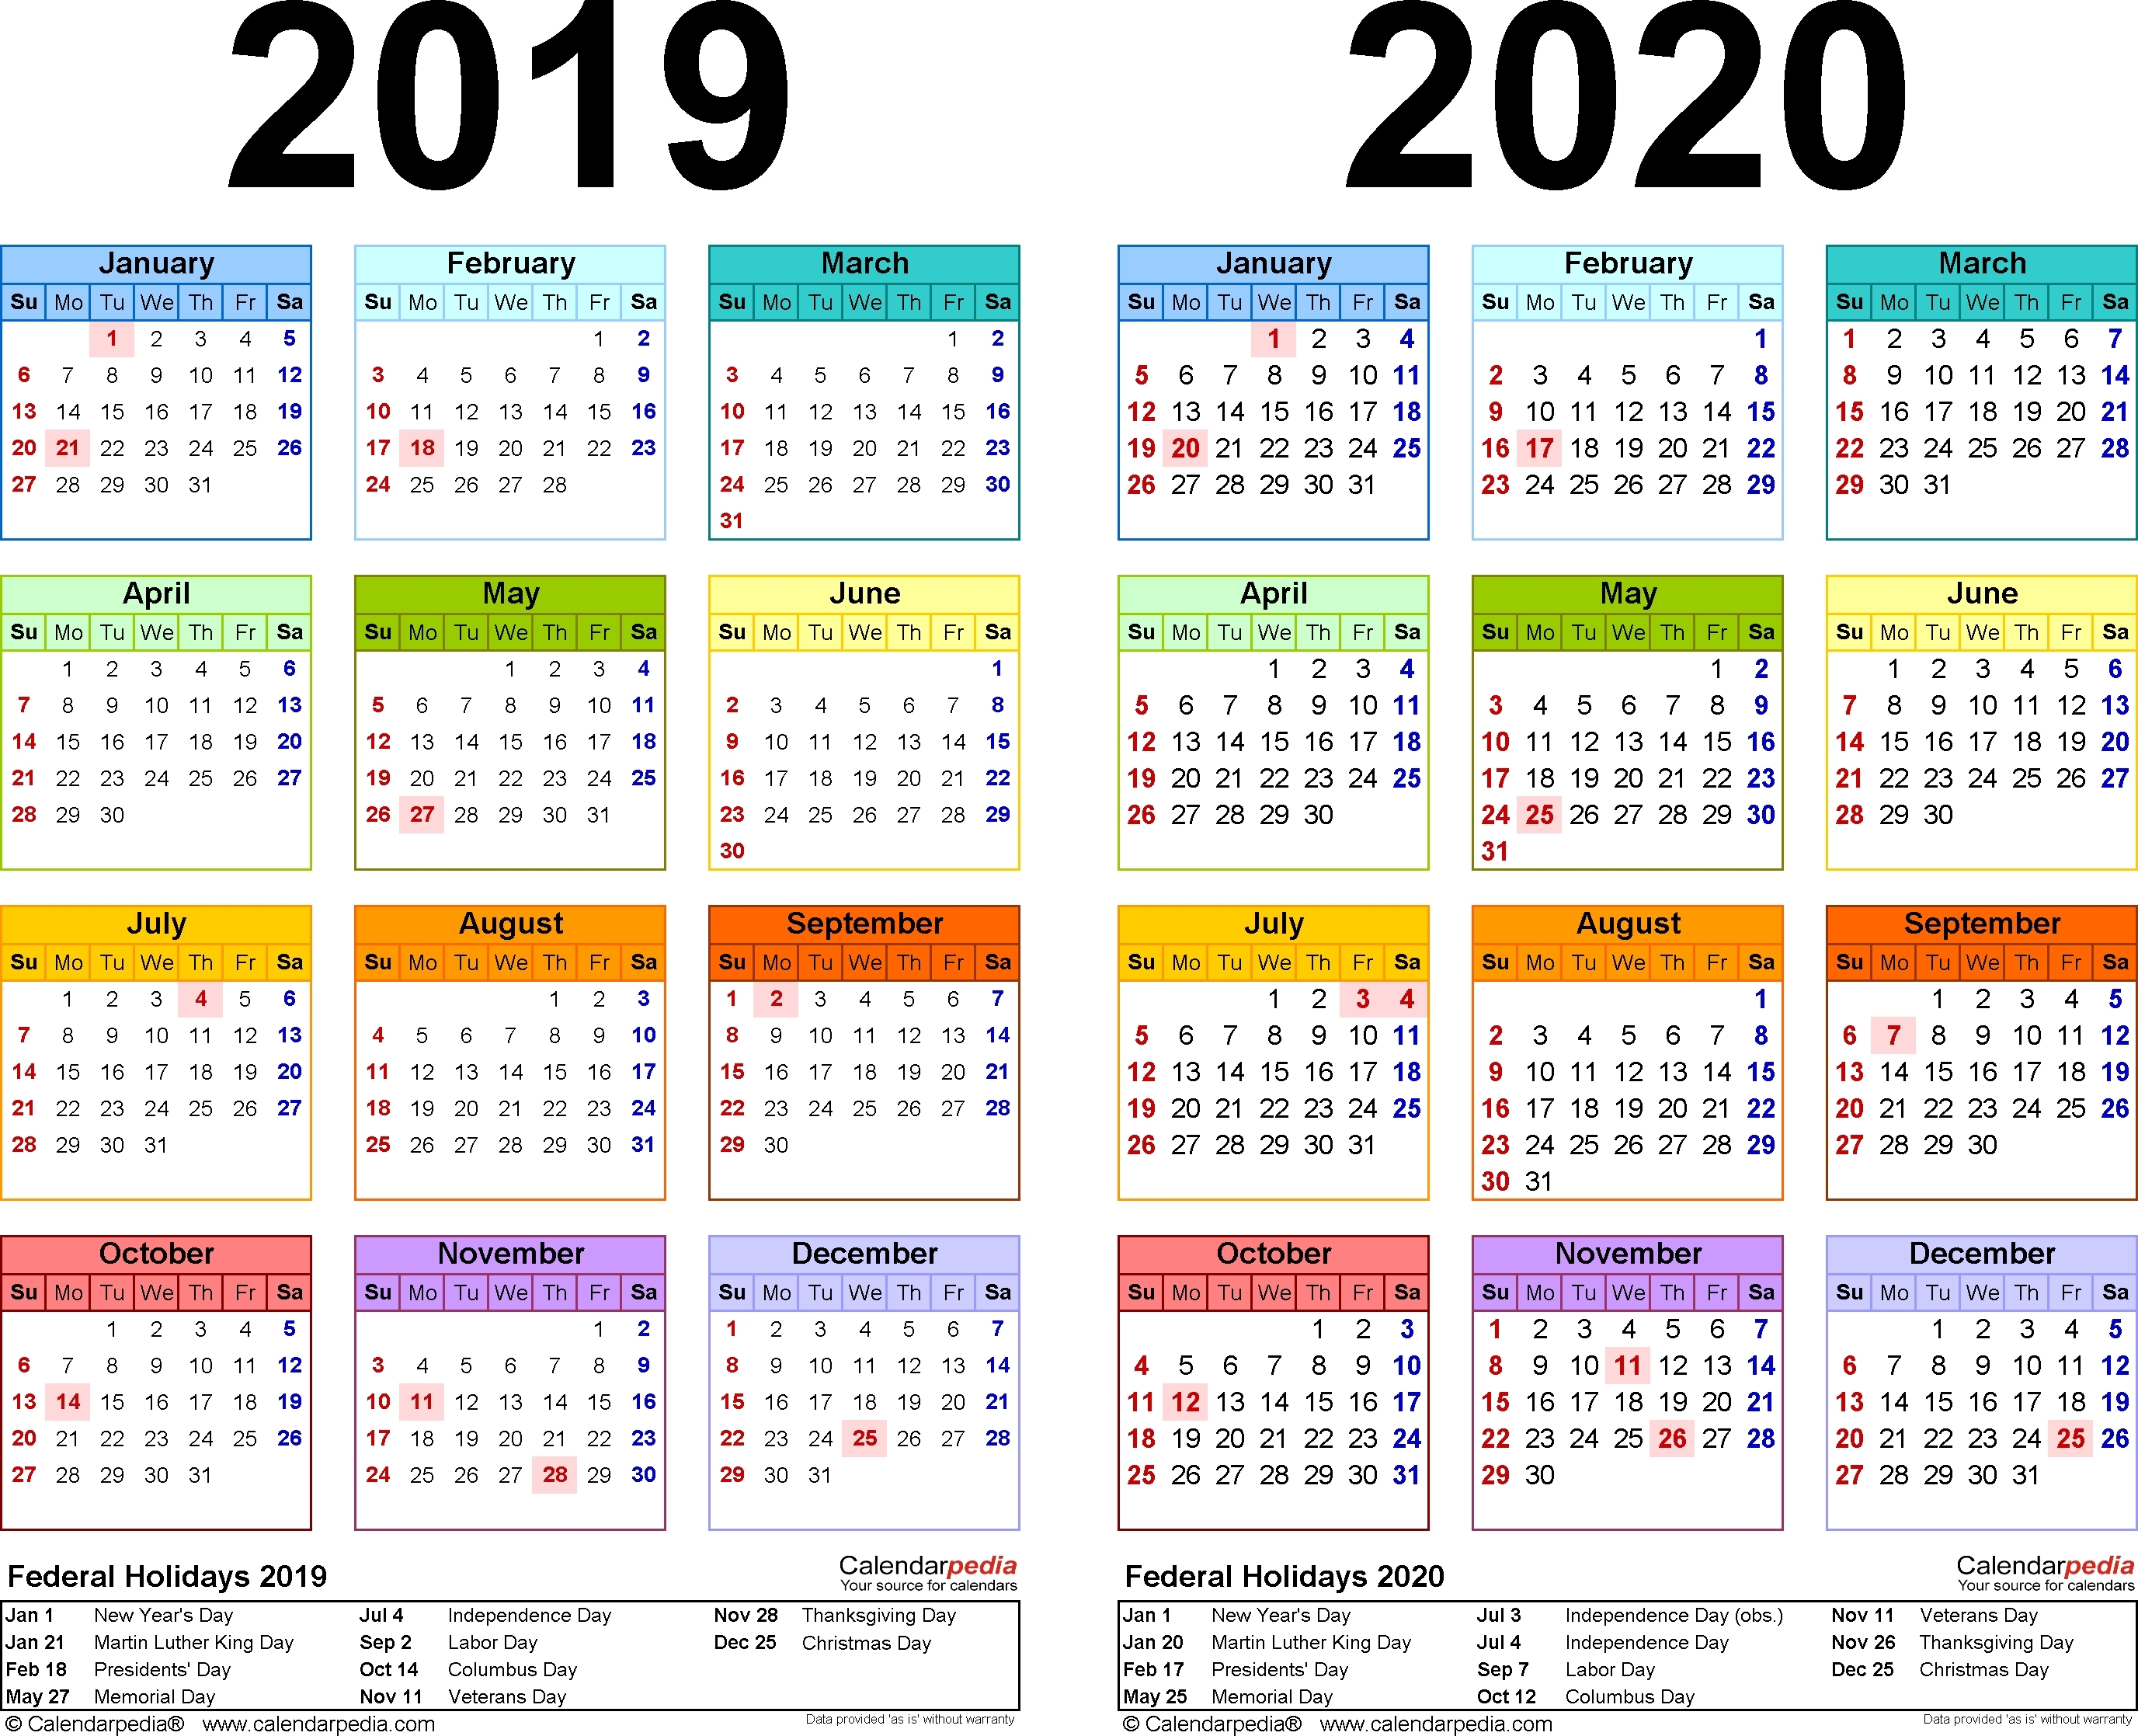 School Calendar And Holidays 2020 | Calendar Design Ideas-2020 Calendar With Holidays South Africa